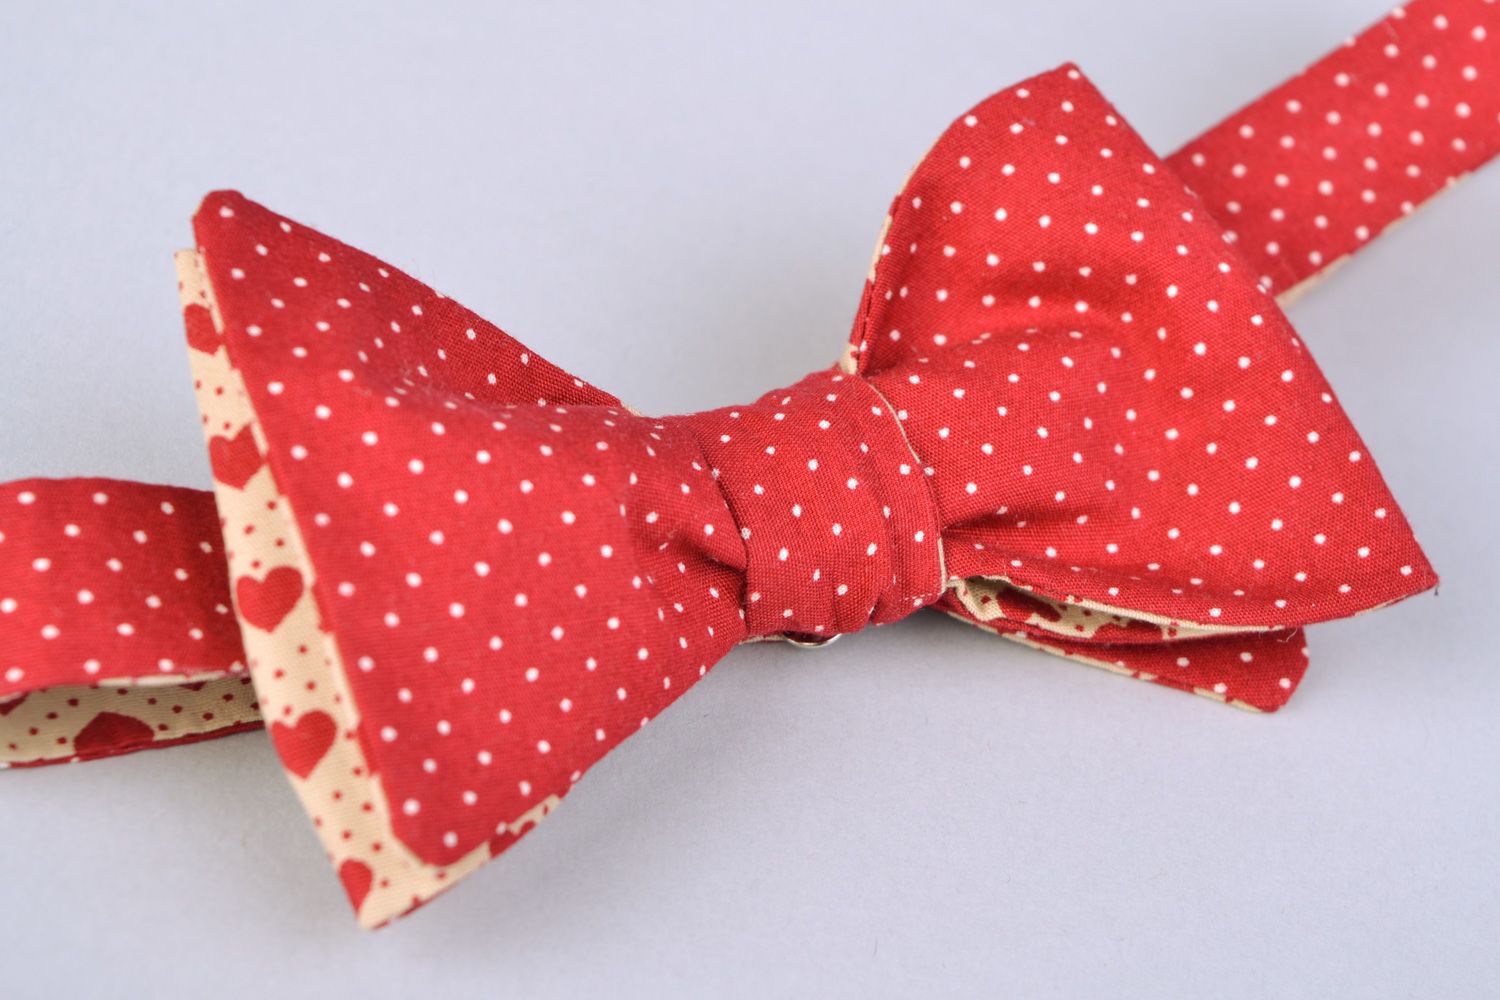 Homemade fabric bow tie photo 5